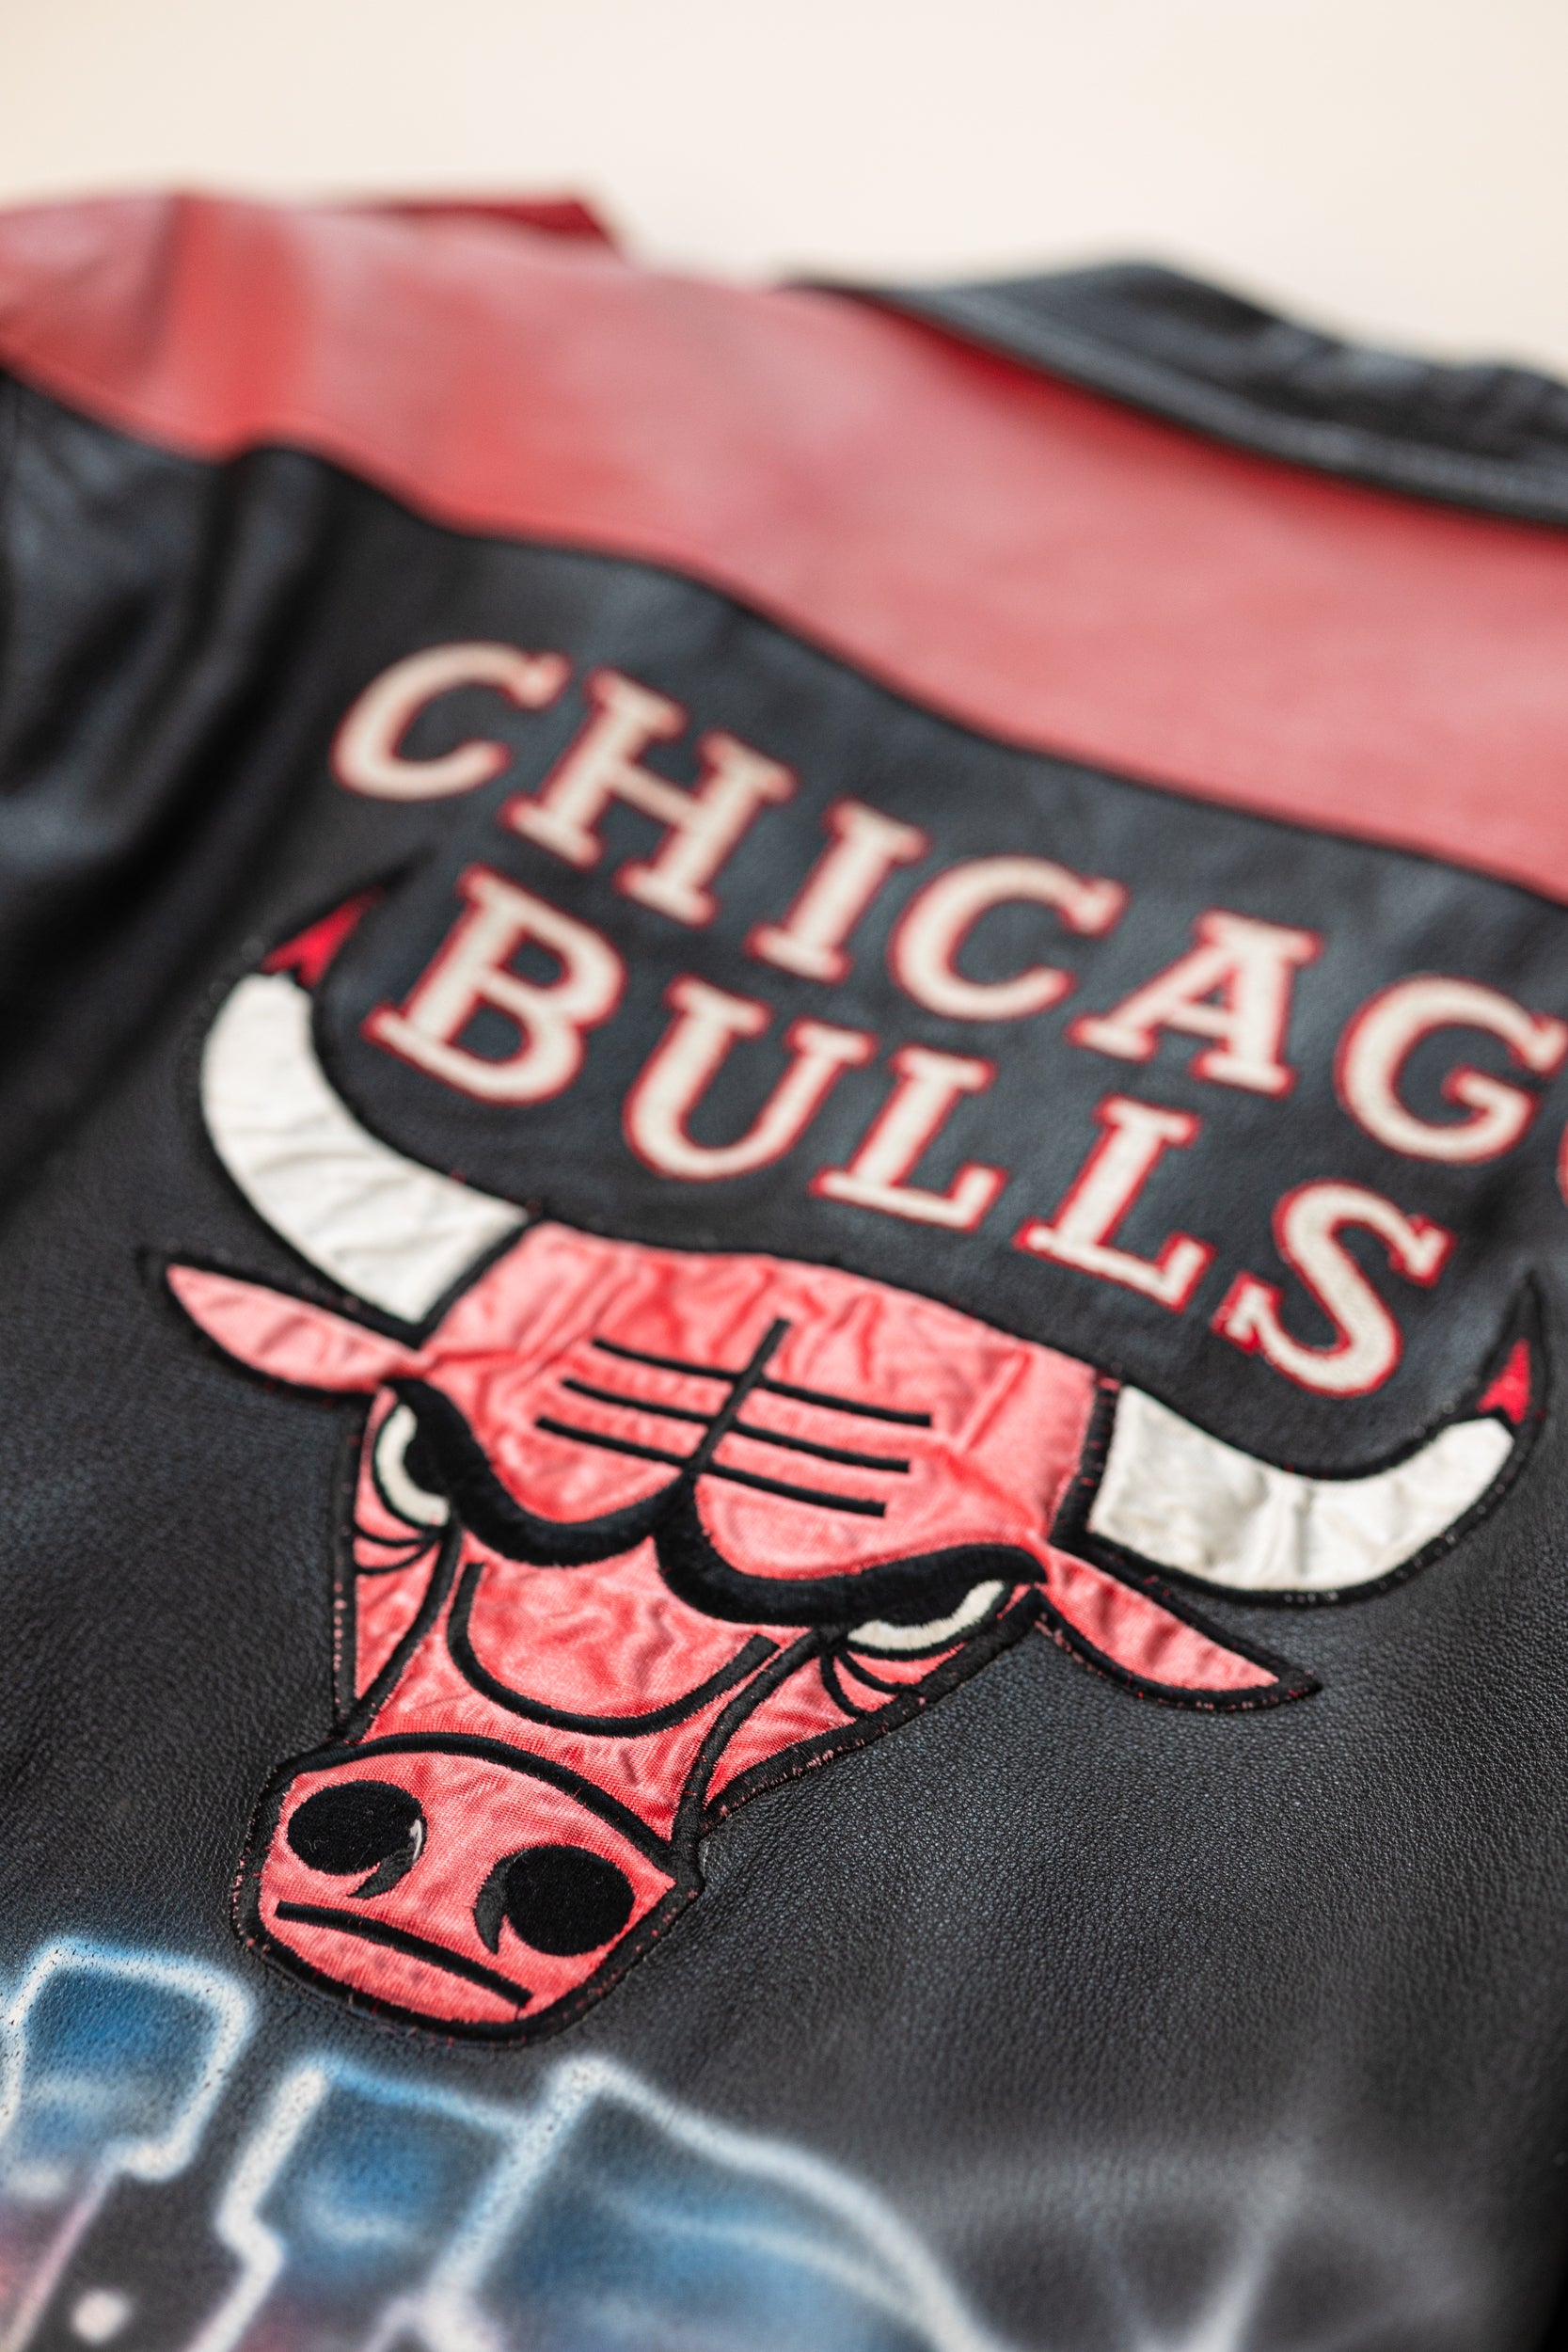 chicago bulls jacket men